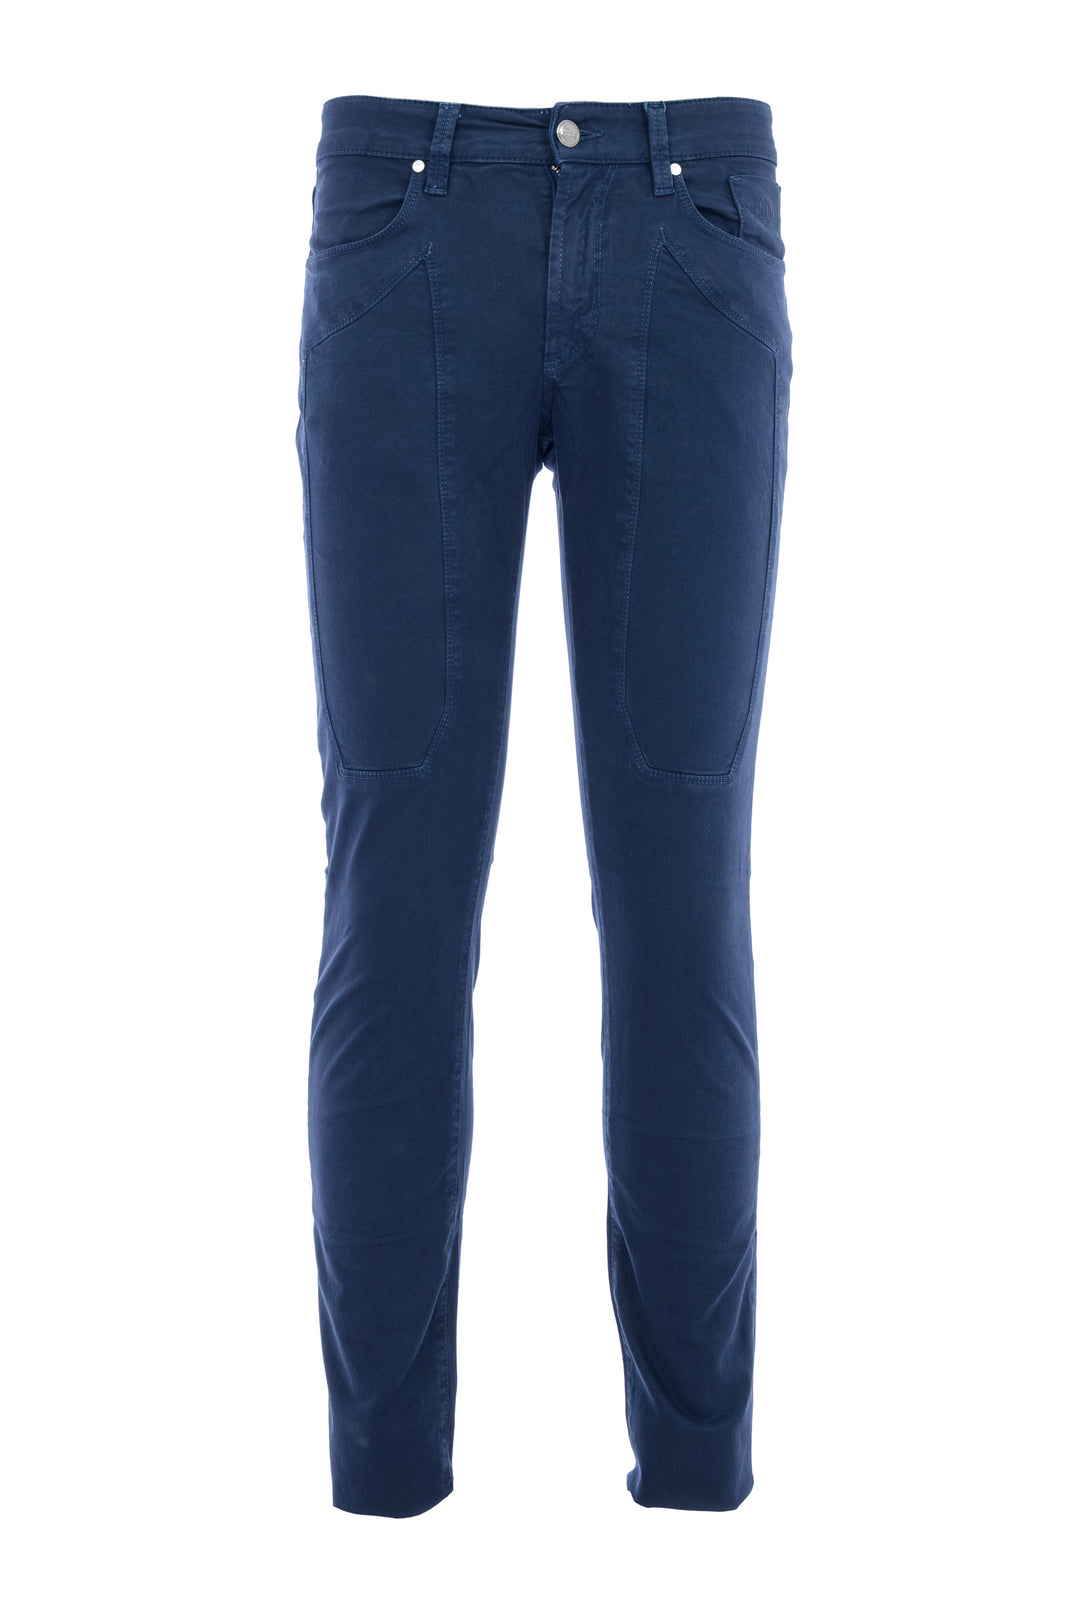 JECKERSON Pantalone jeans blu scuro 5 tasche - Mancinelli 1954